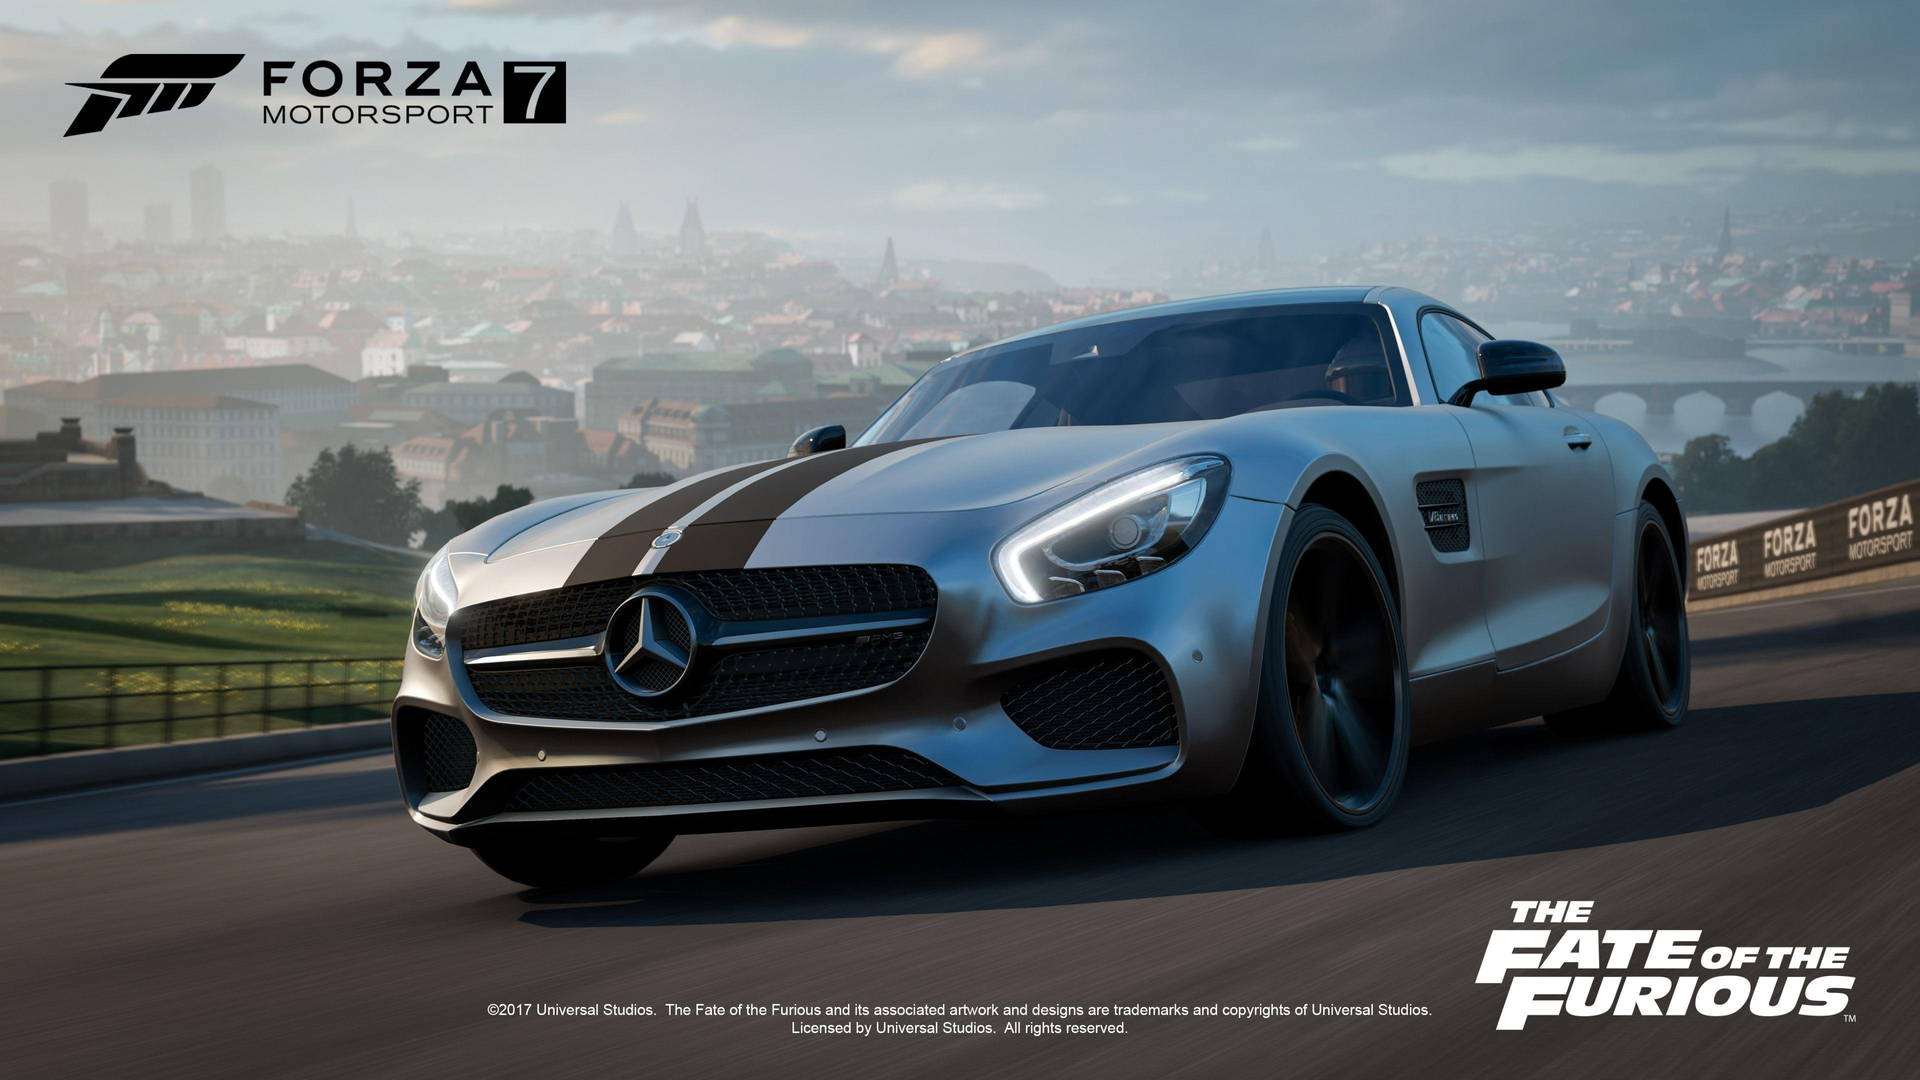 Forza Motorsport 7 retro car 1080x1920 iPhone 8766S Plus wallpaper  background picture image